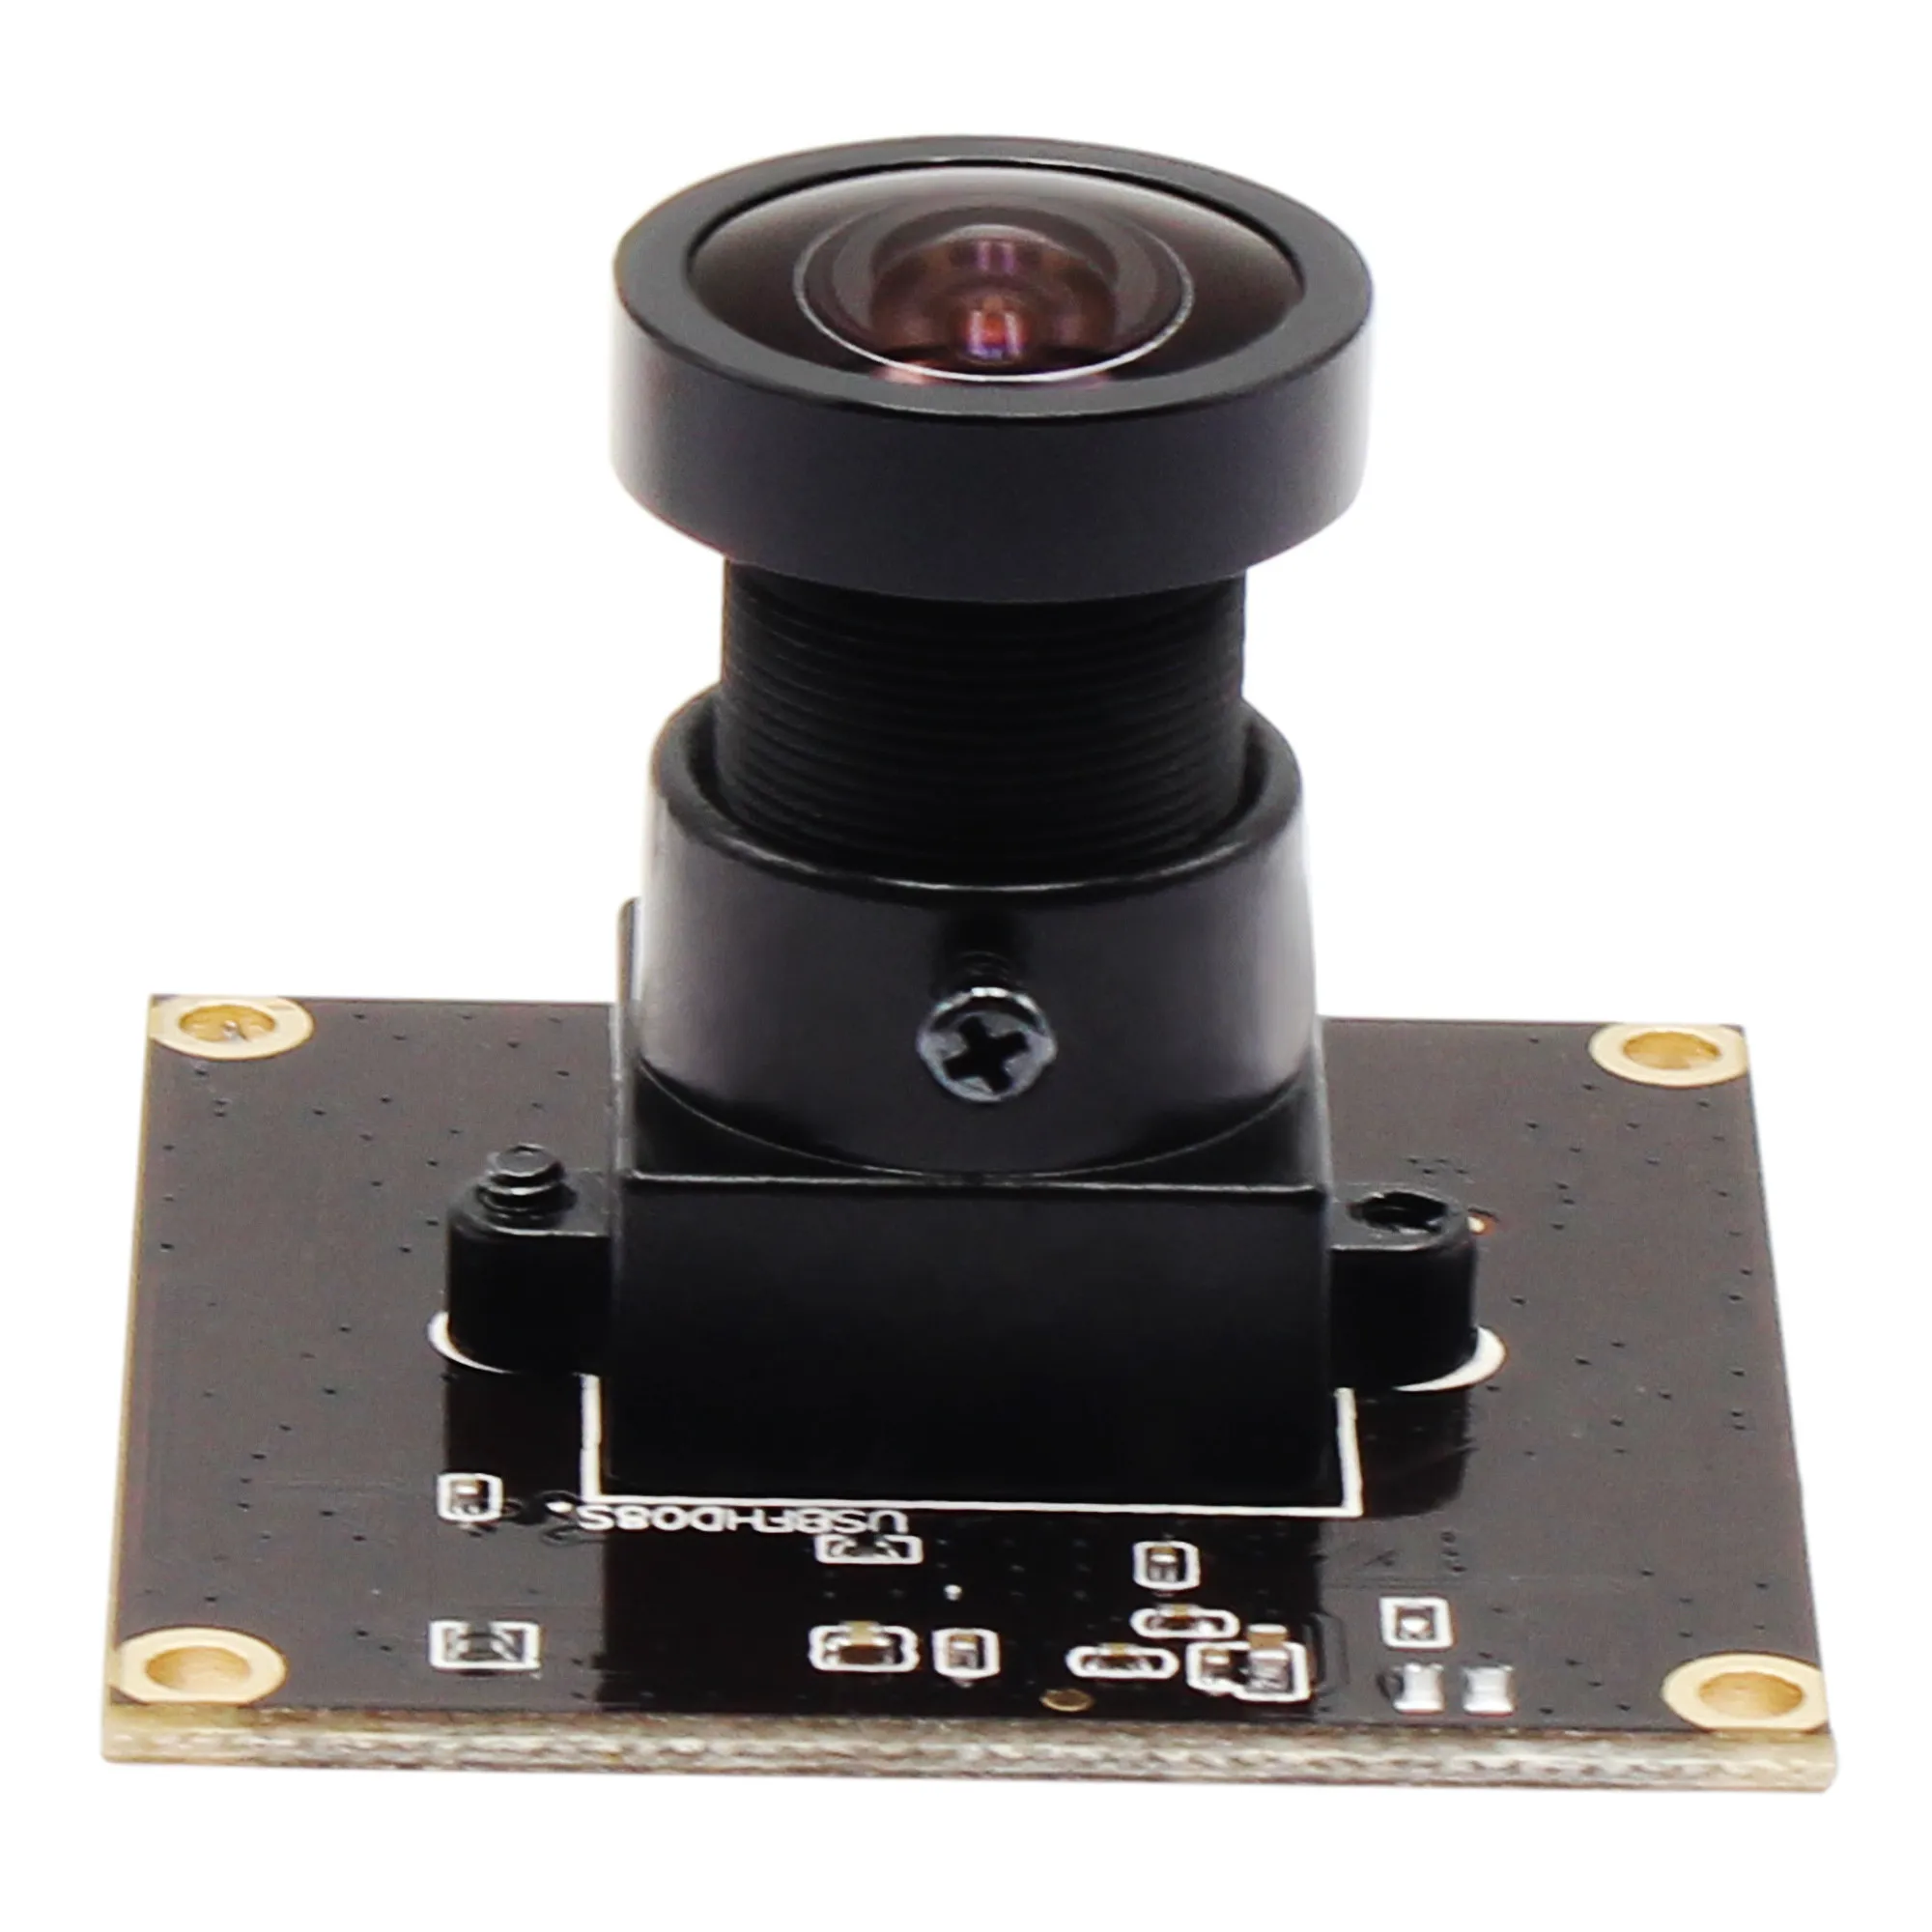 ELP 2Megapixel High Speed 60fps/120fps/260fps USB2.0 Camera Module with 8mm Lens 